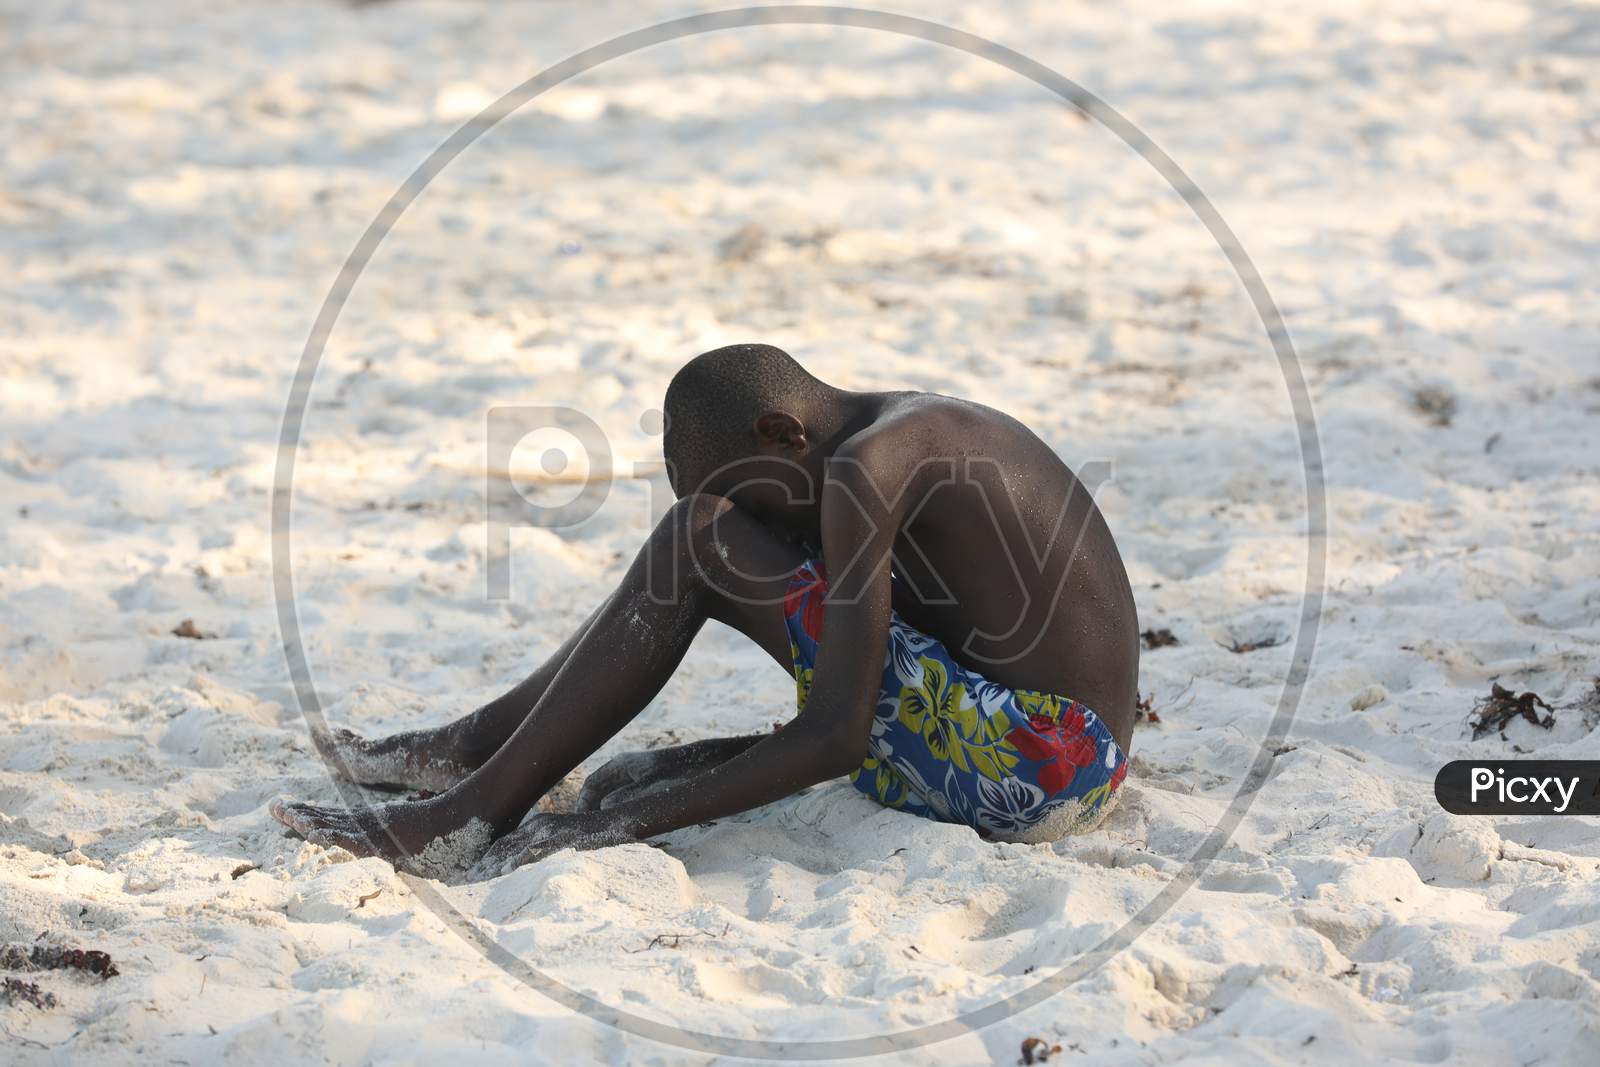 A Shirtless Kenya boy sitting alone by the beach